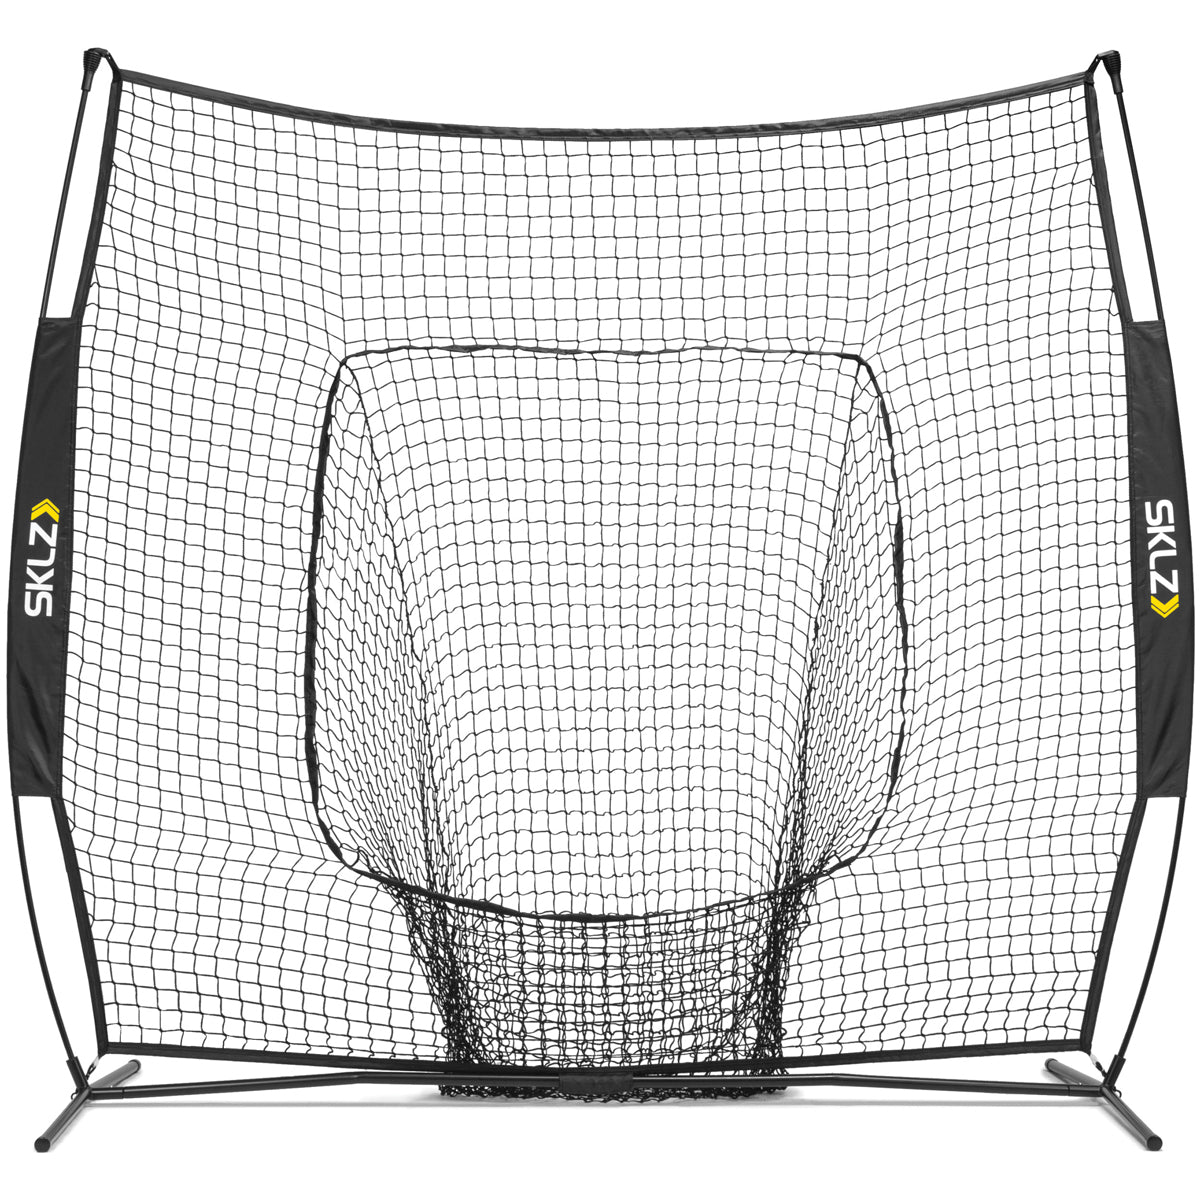 SKLZ Baseball and Softball Hitting Net - Black/Yellow SKLZ